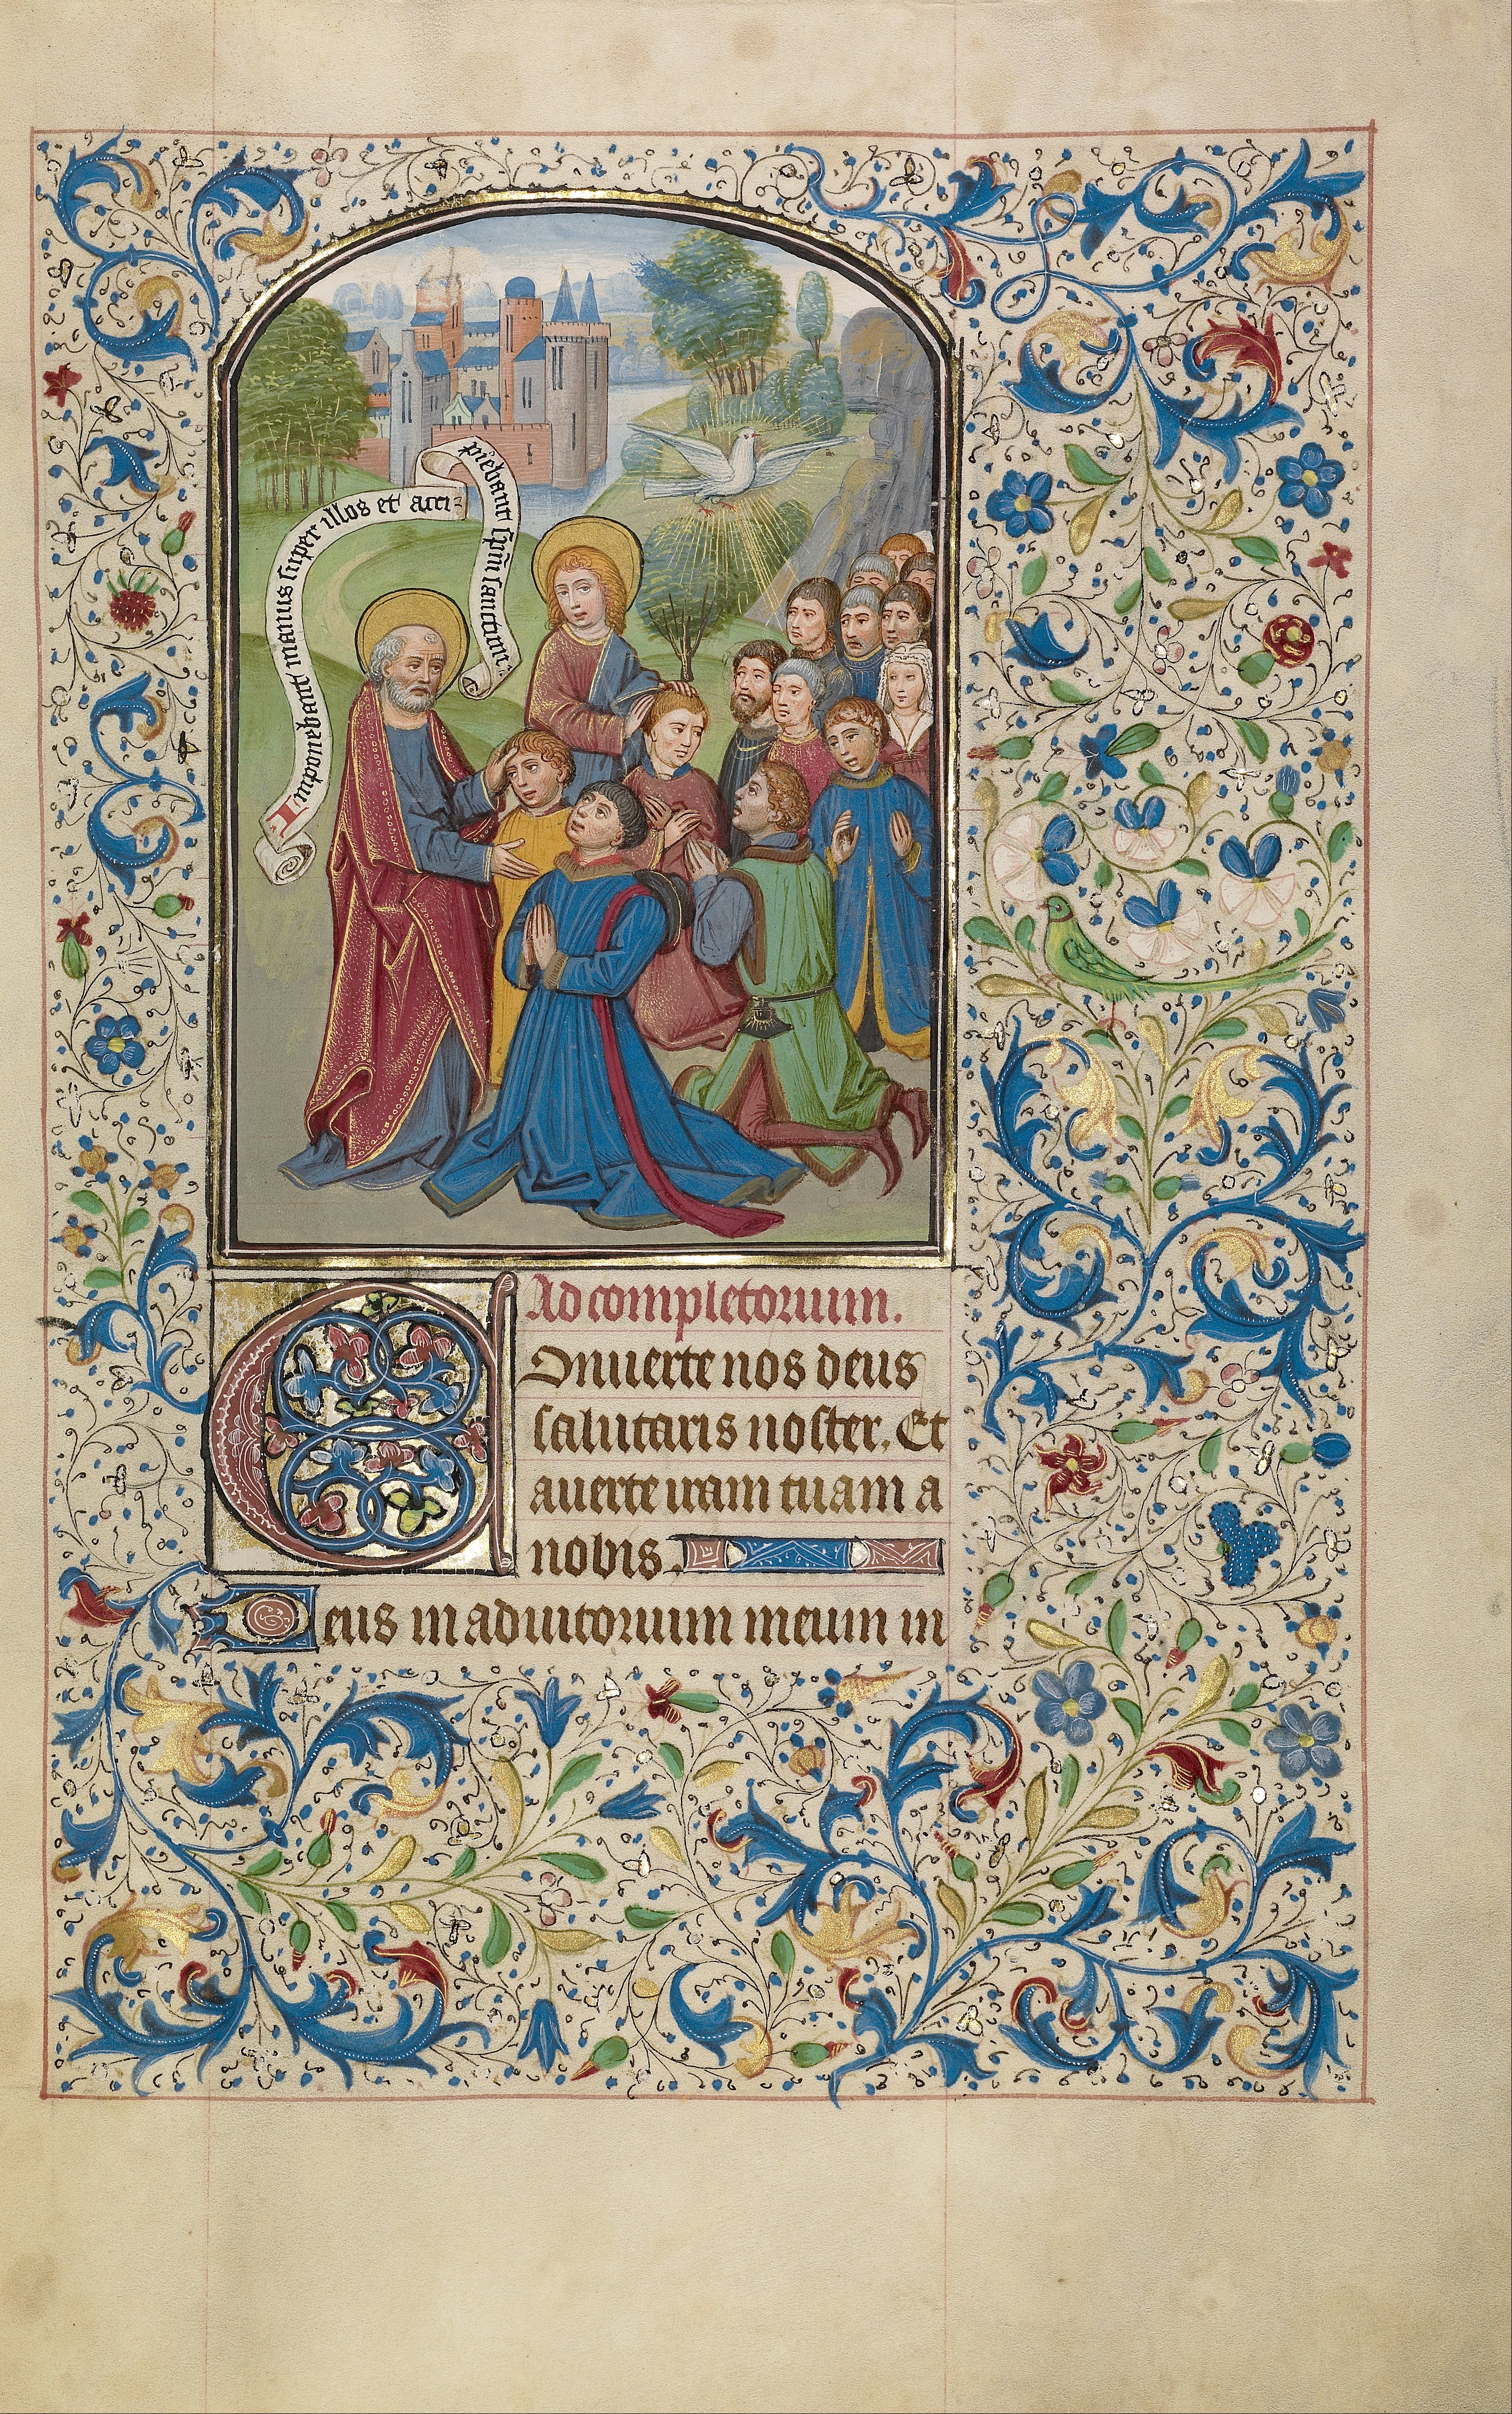 Willem Vrelant (Flemish, died 1481, active 1454 - 1481) - Saints Peter and John Baptizing the Samarians - Google Art Project